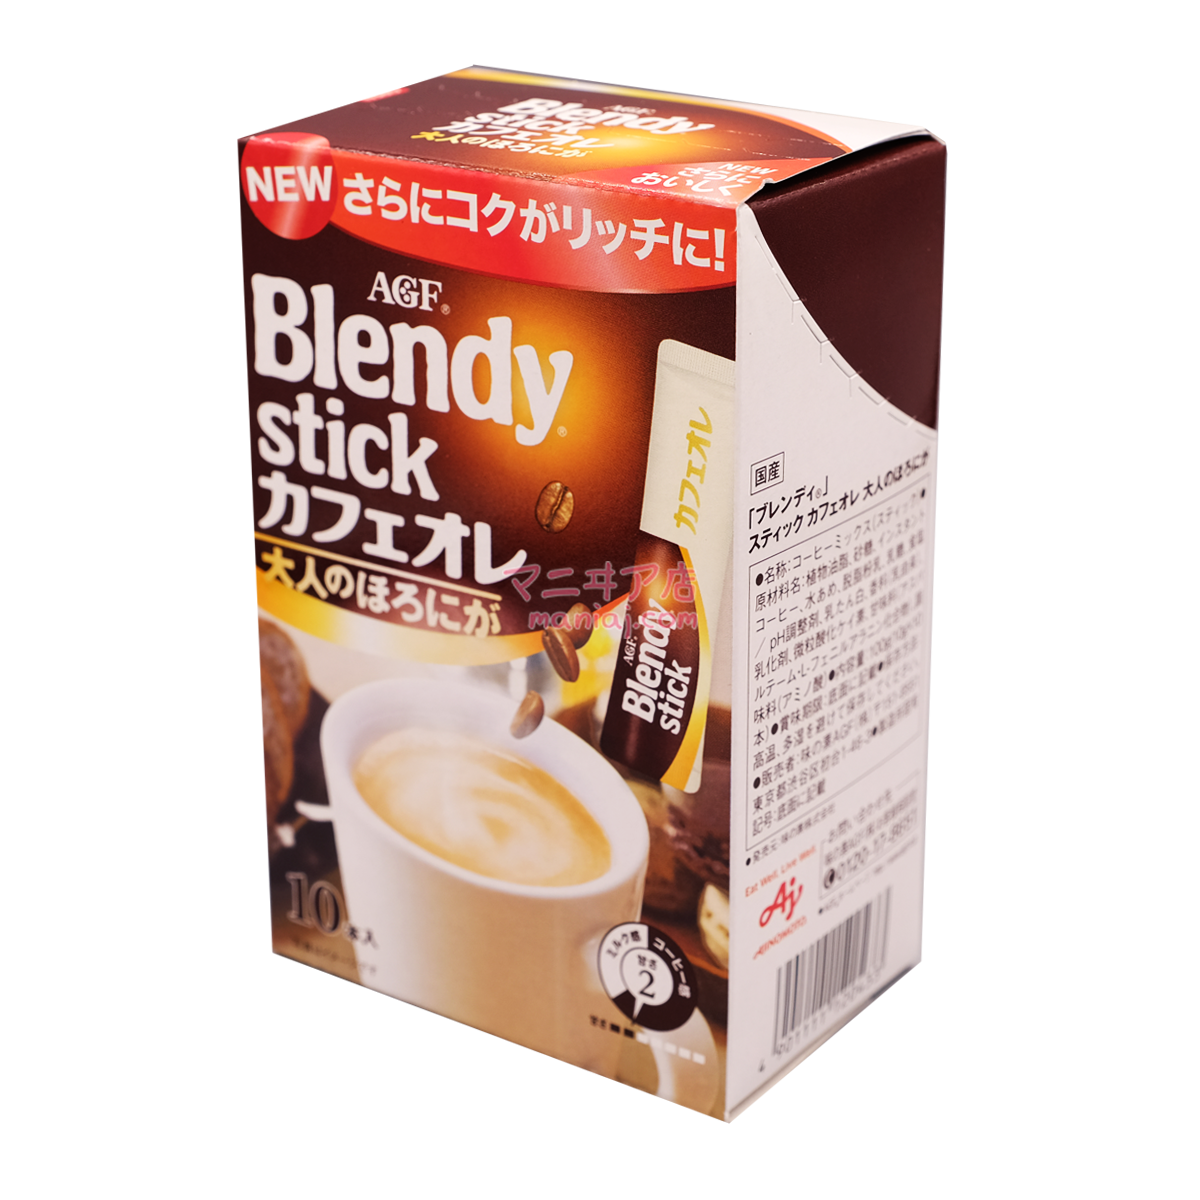 Blendy stick Coffee Milk Adult's Slight Bitterness